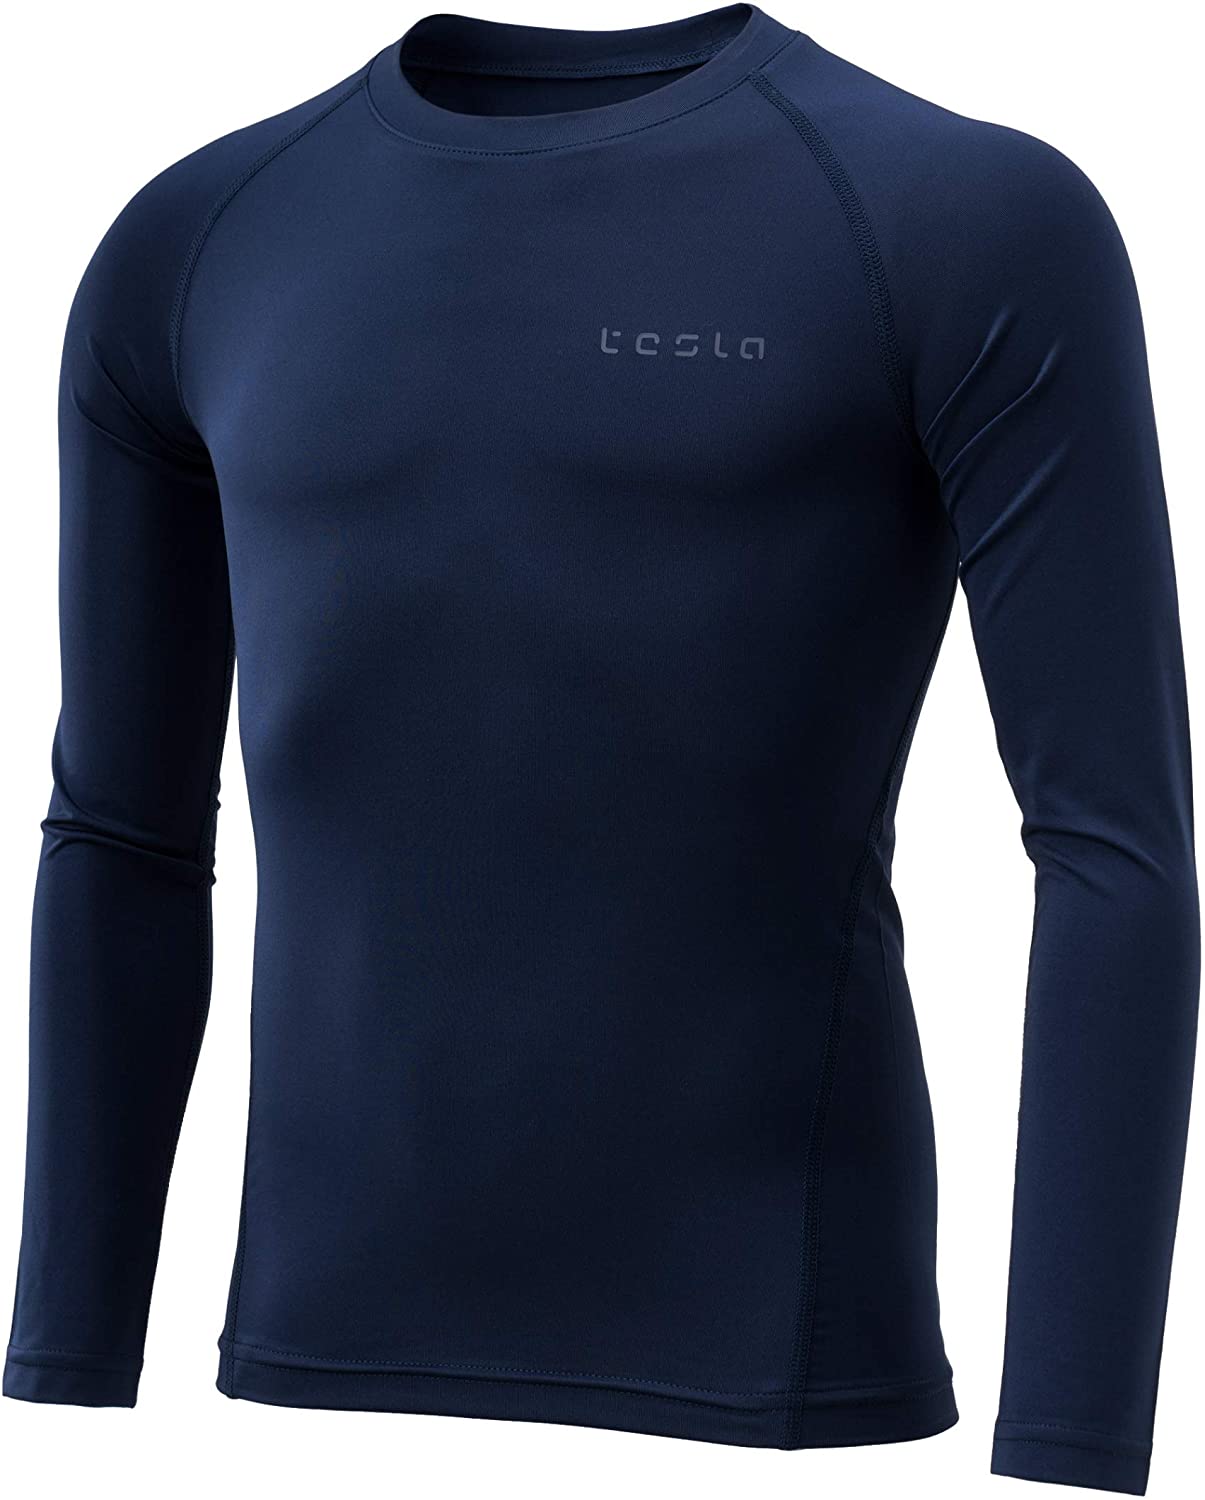 TSLA Boys Long Sleeve T-Shirt Baselayer Cool Dry Compression Top